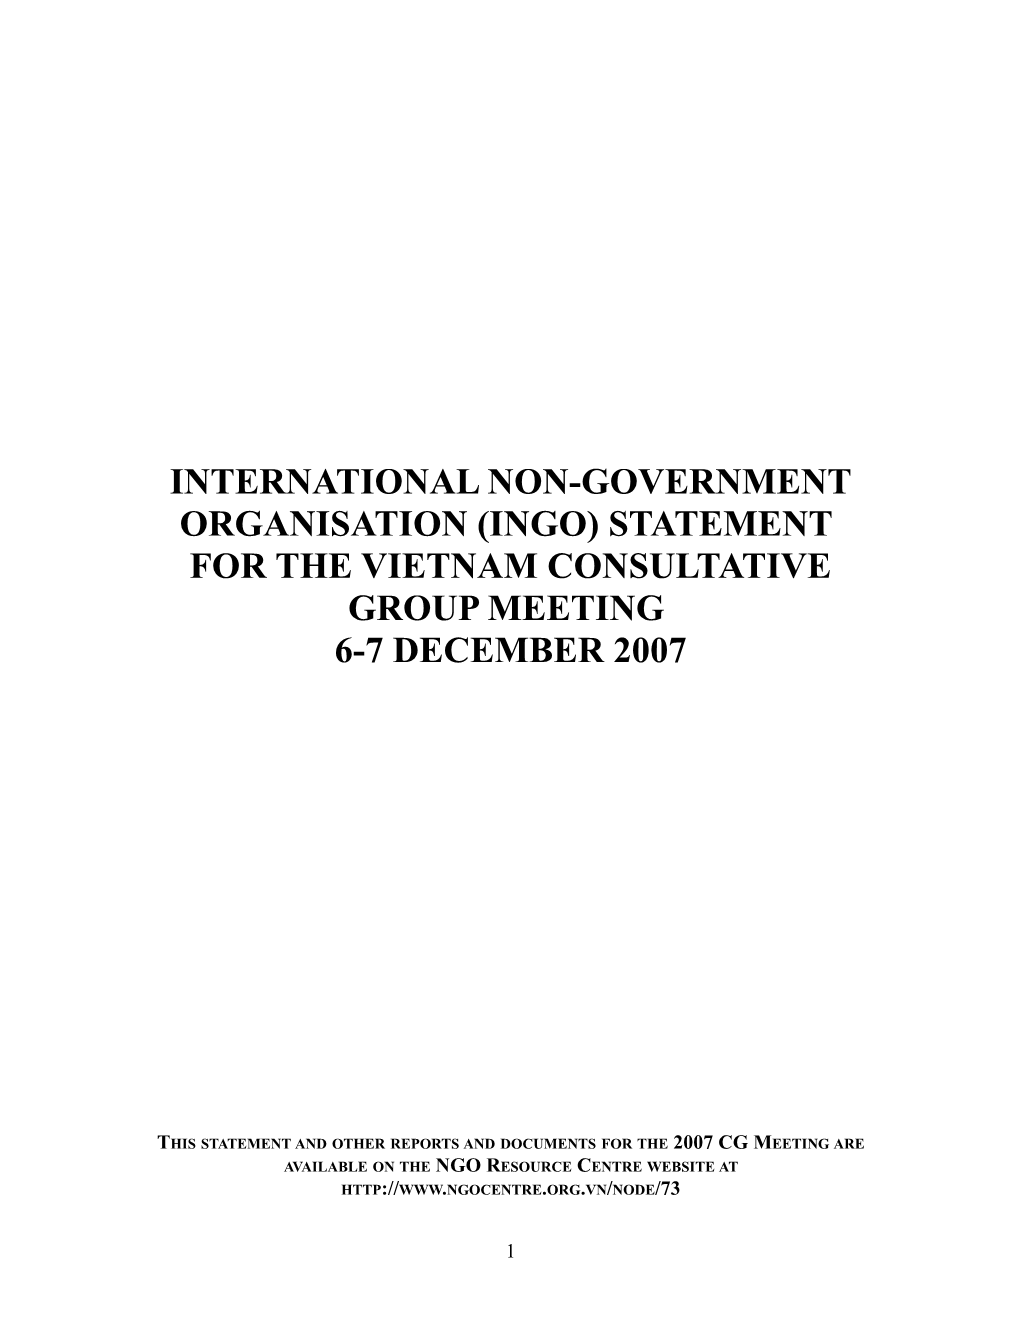 International Non-Government Organisation (INGO) Statement for the Vietnam Consultative